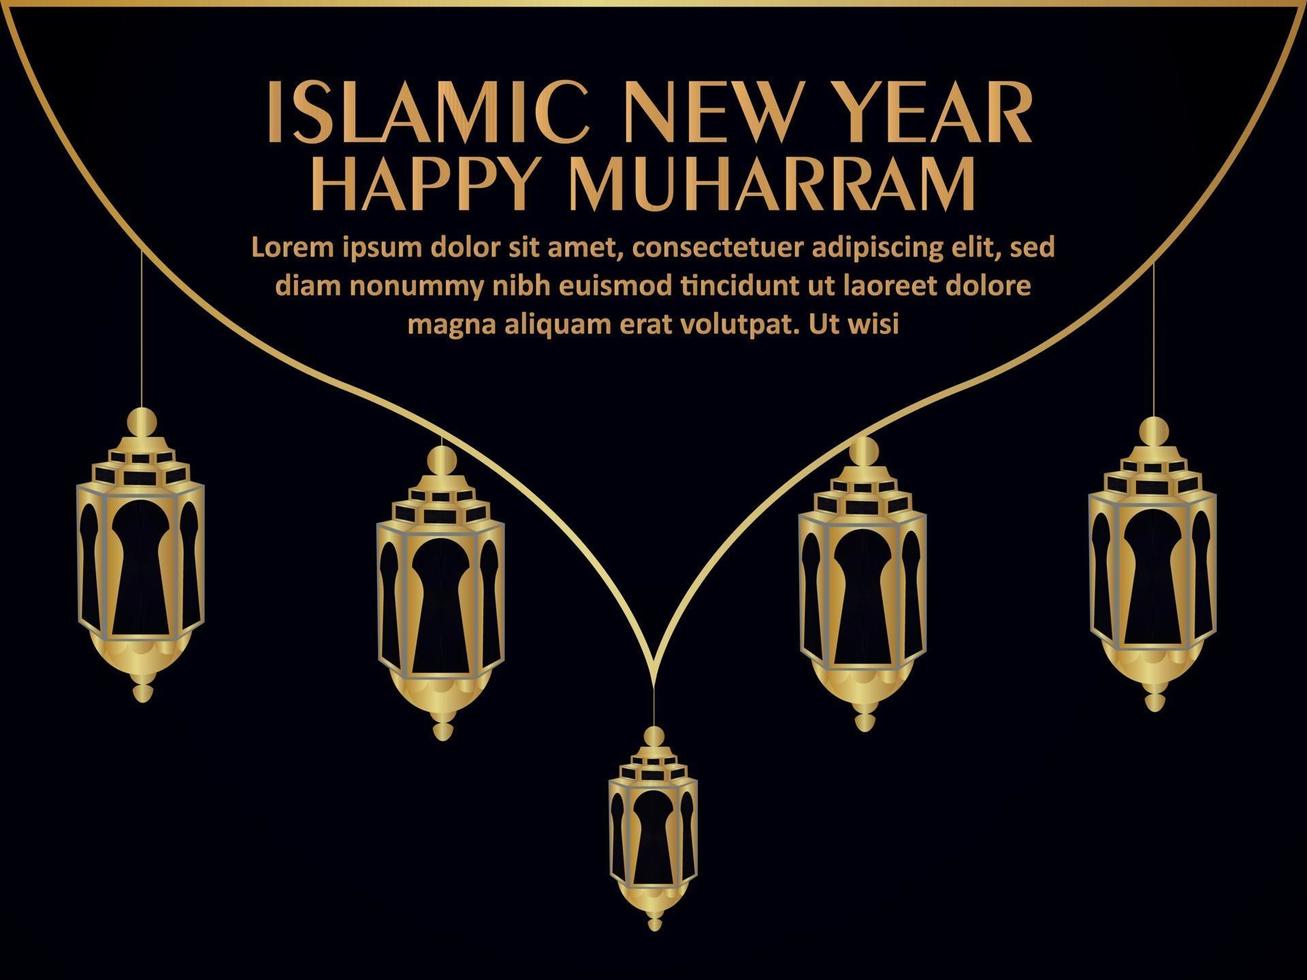 Flat design concept of happy muharram with islamic lantern vector